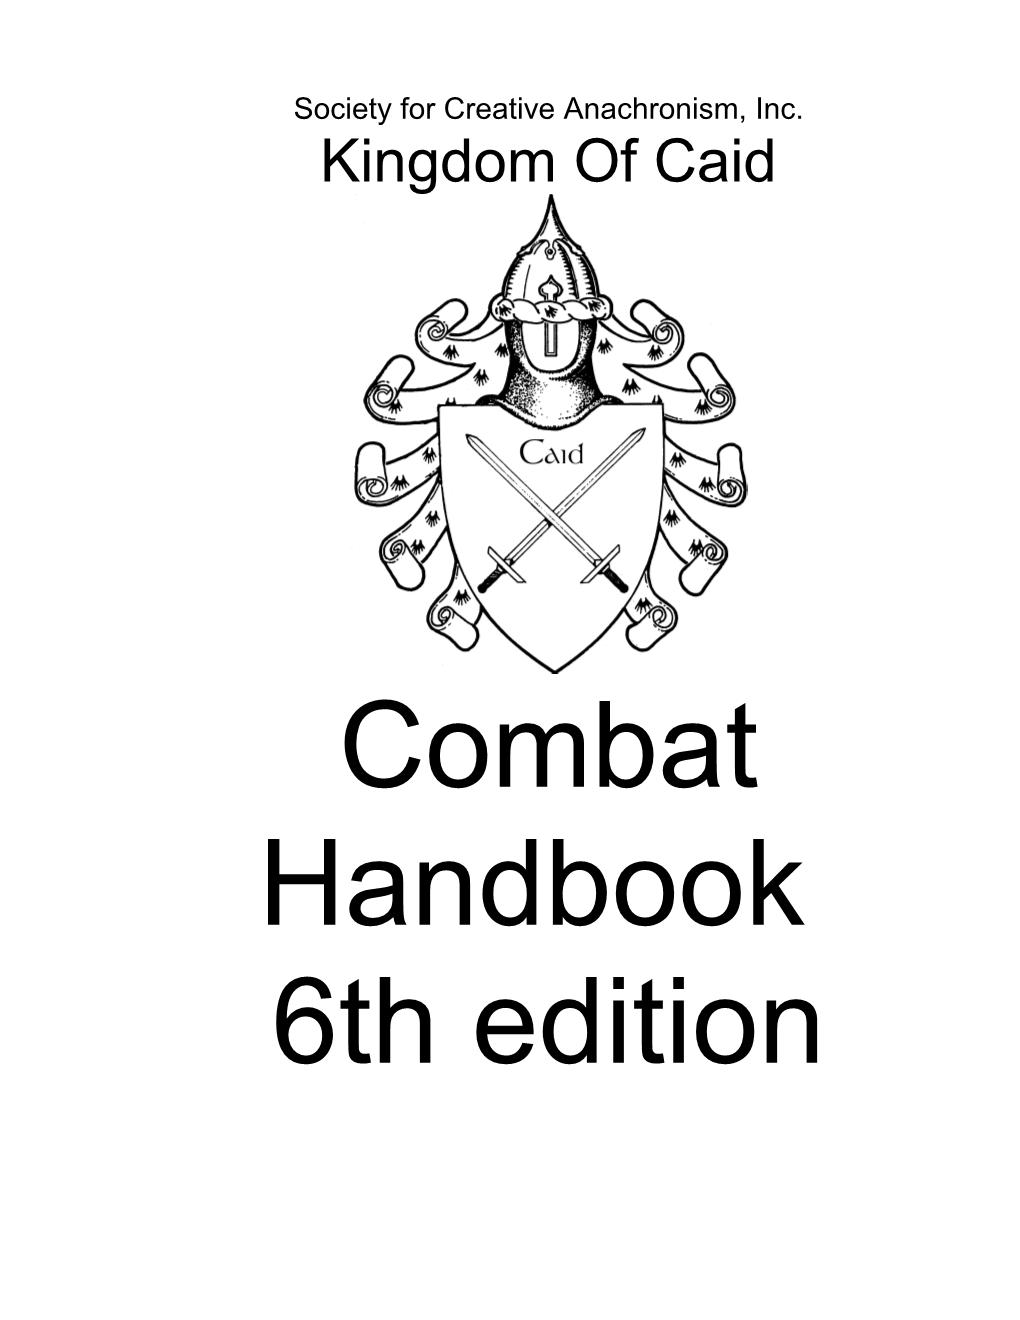 The Combat Handbook of Caid